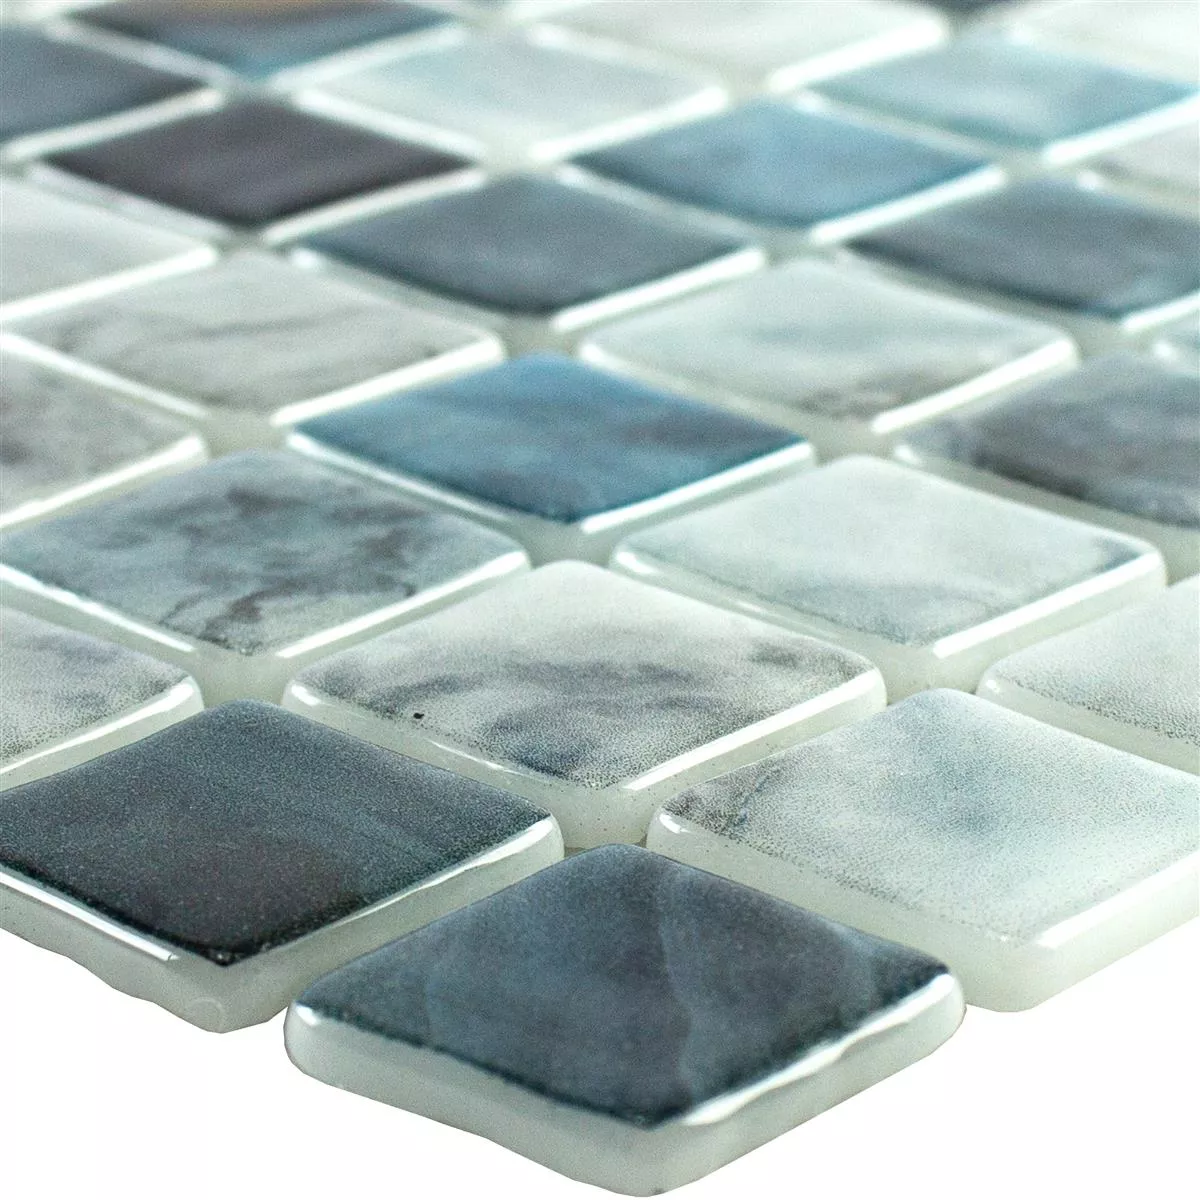 Glass Mosaic Swimming Pool Baltic Blue Grey 25x25mm